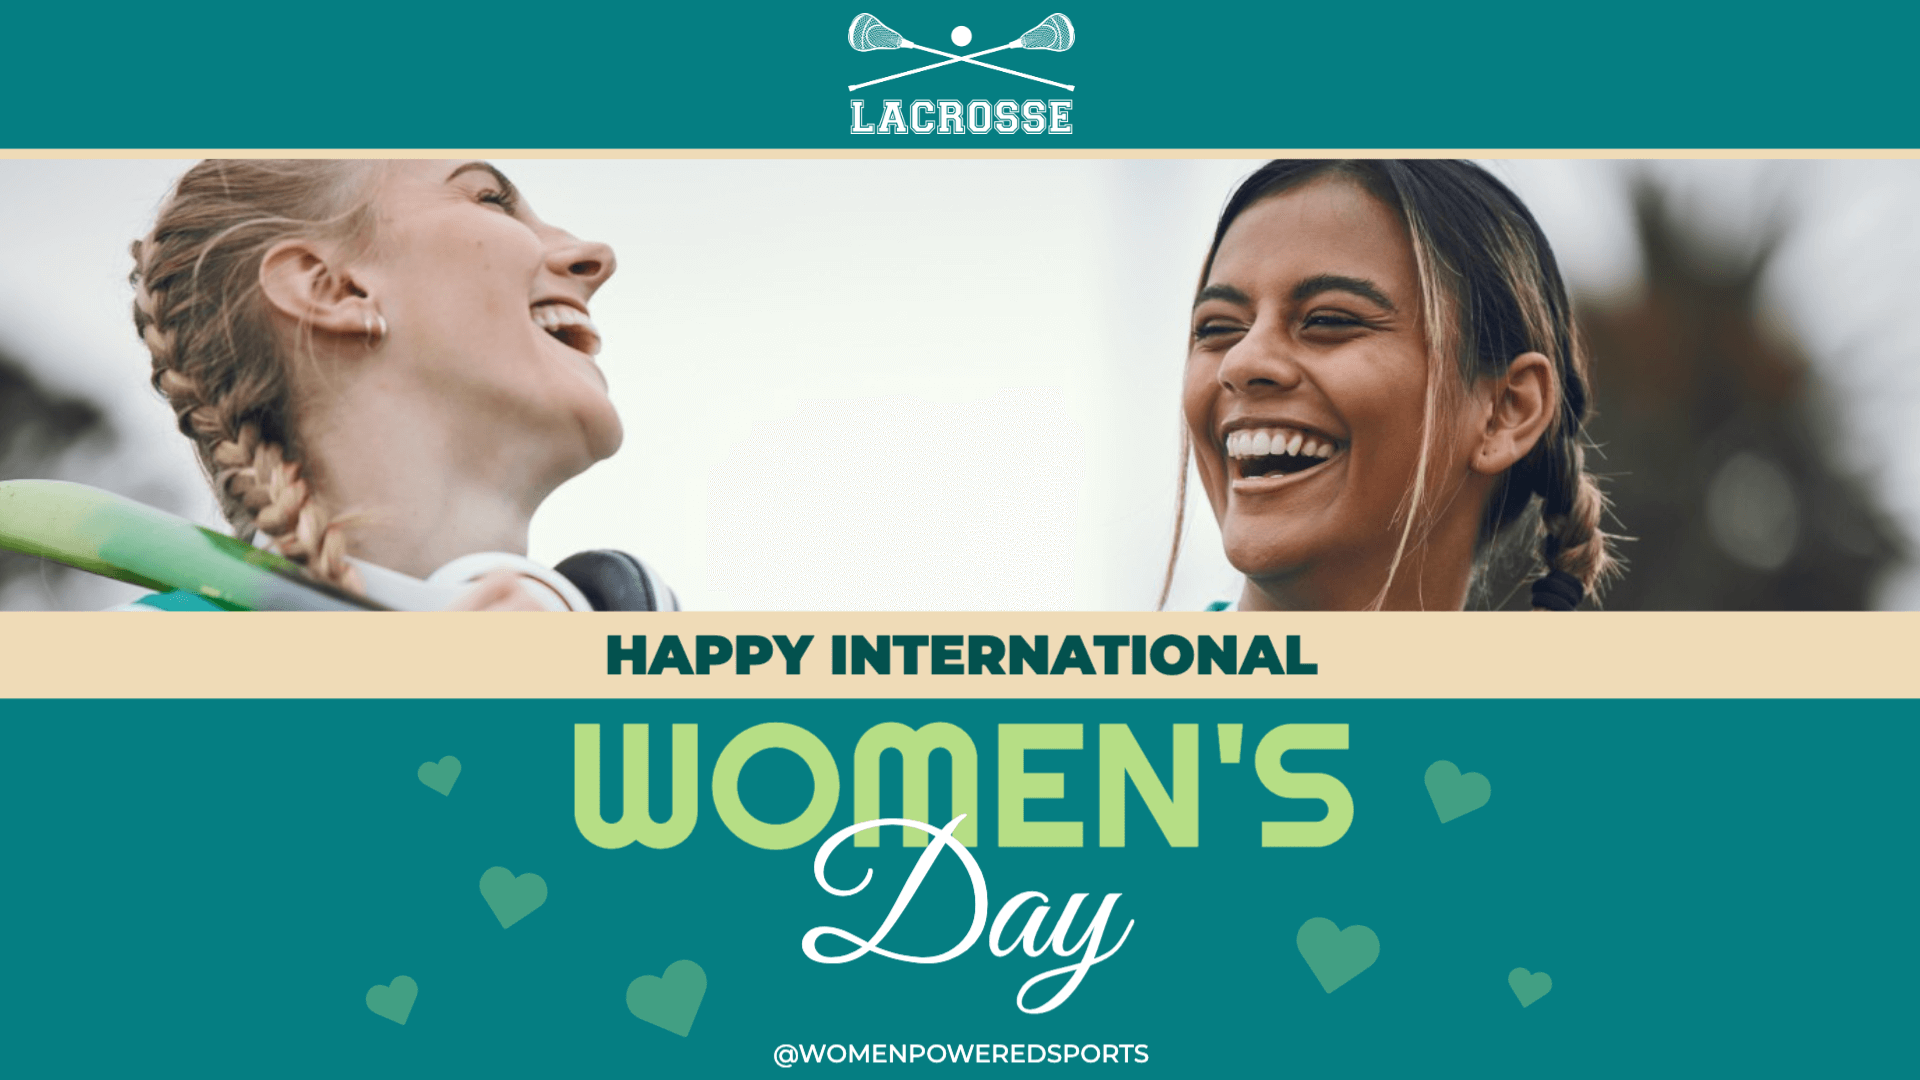 Happy International Women's Day Design